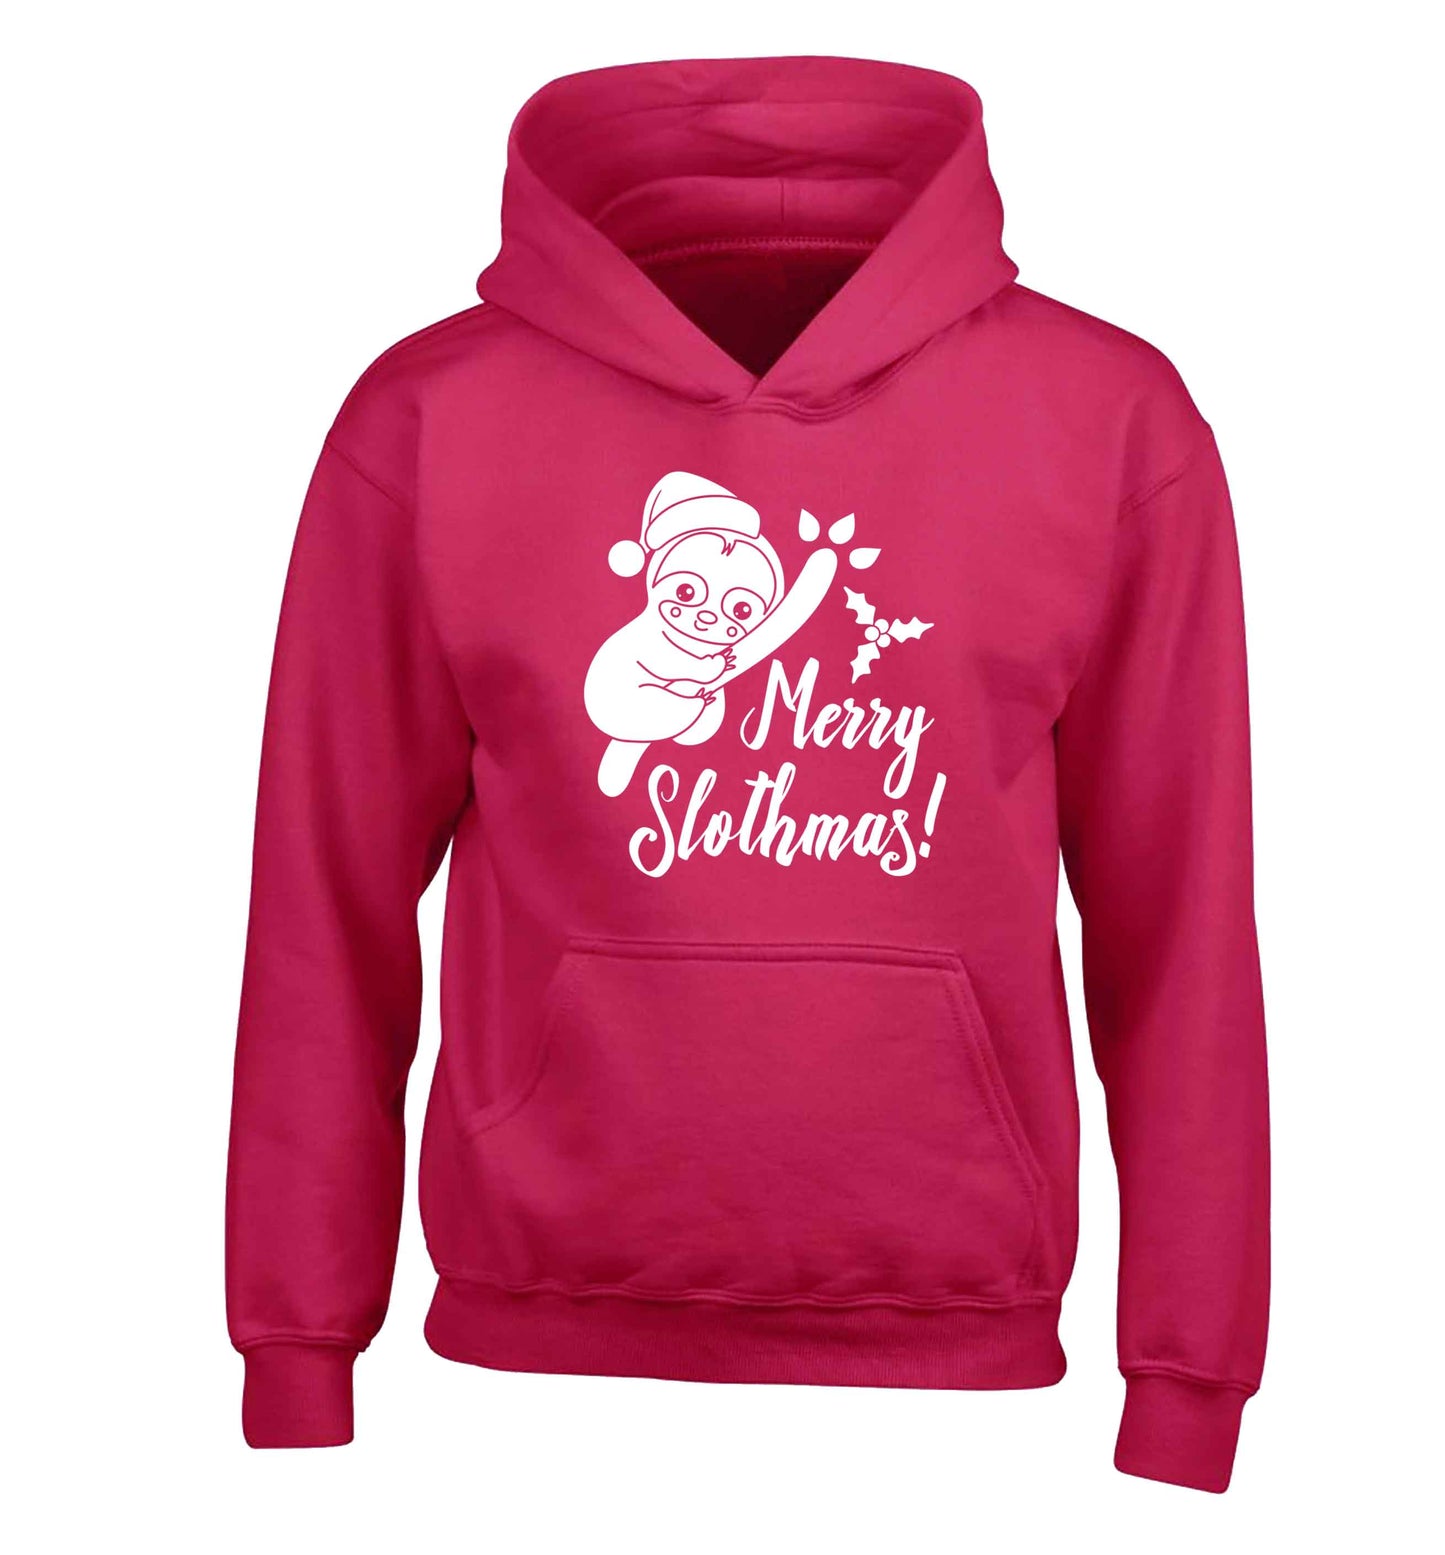 Merry Slothmas children's pink hoodie 12-13 Years